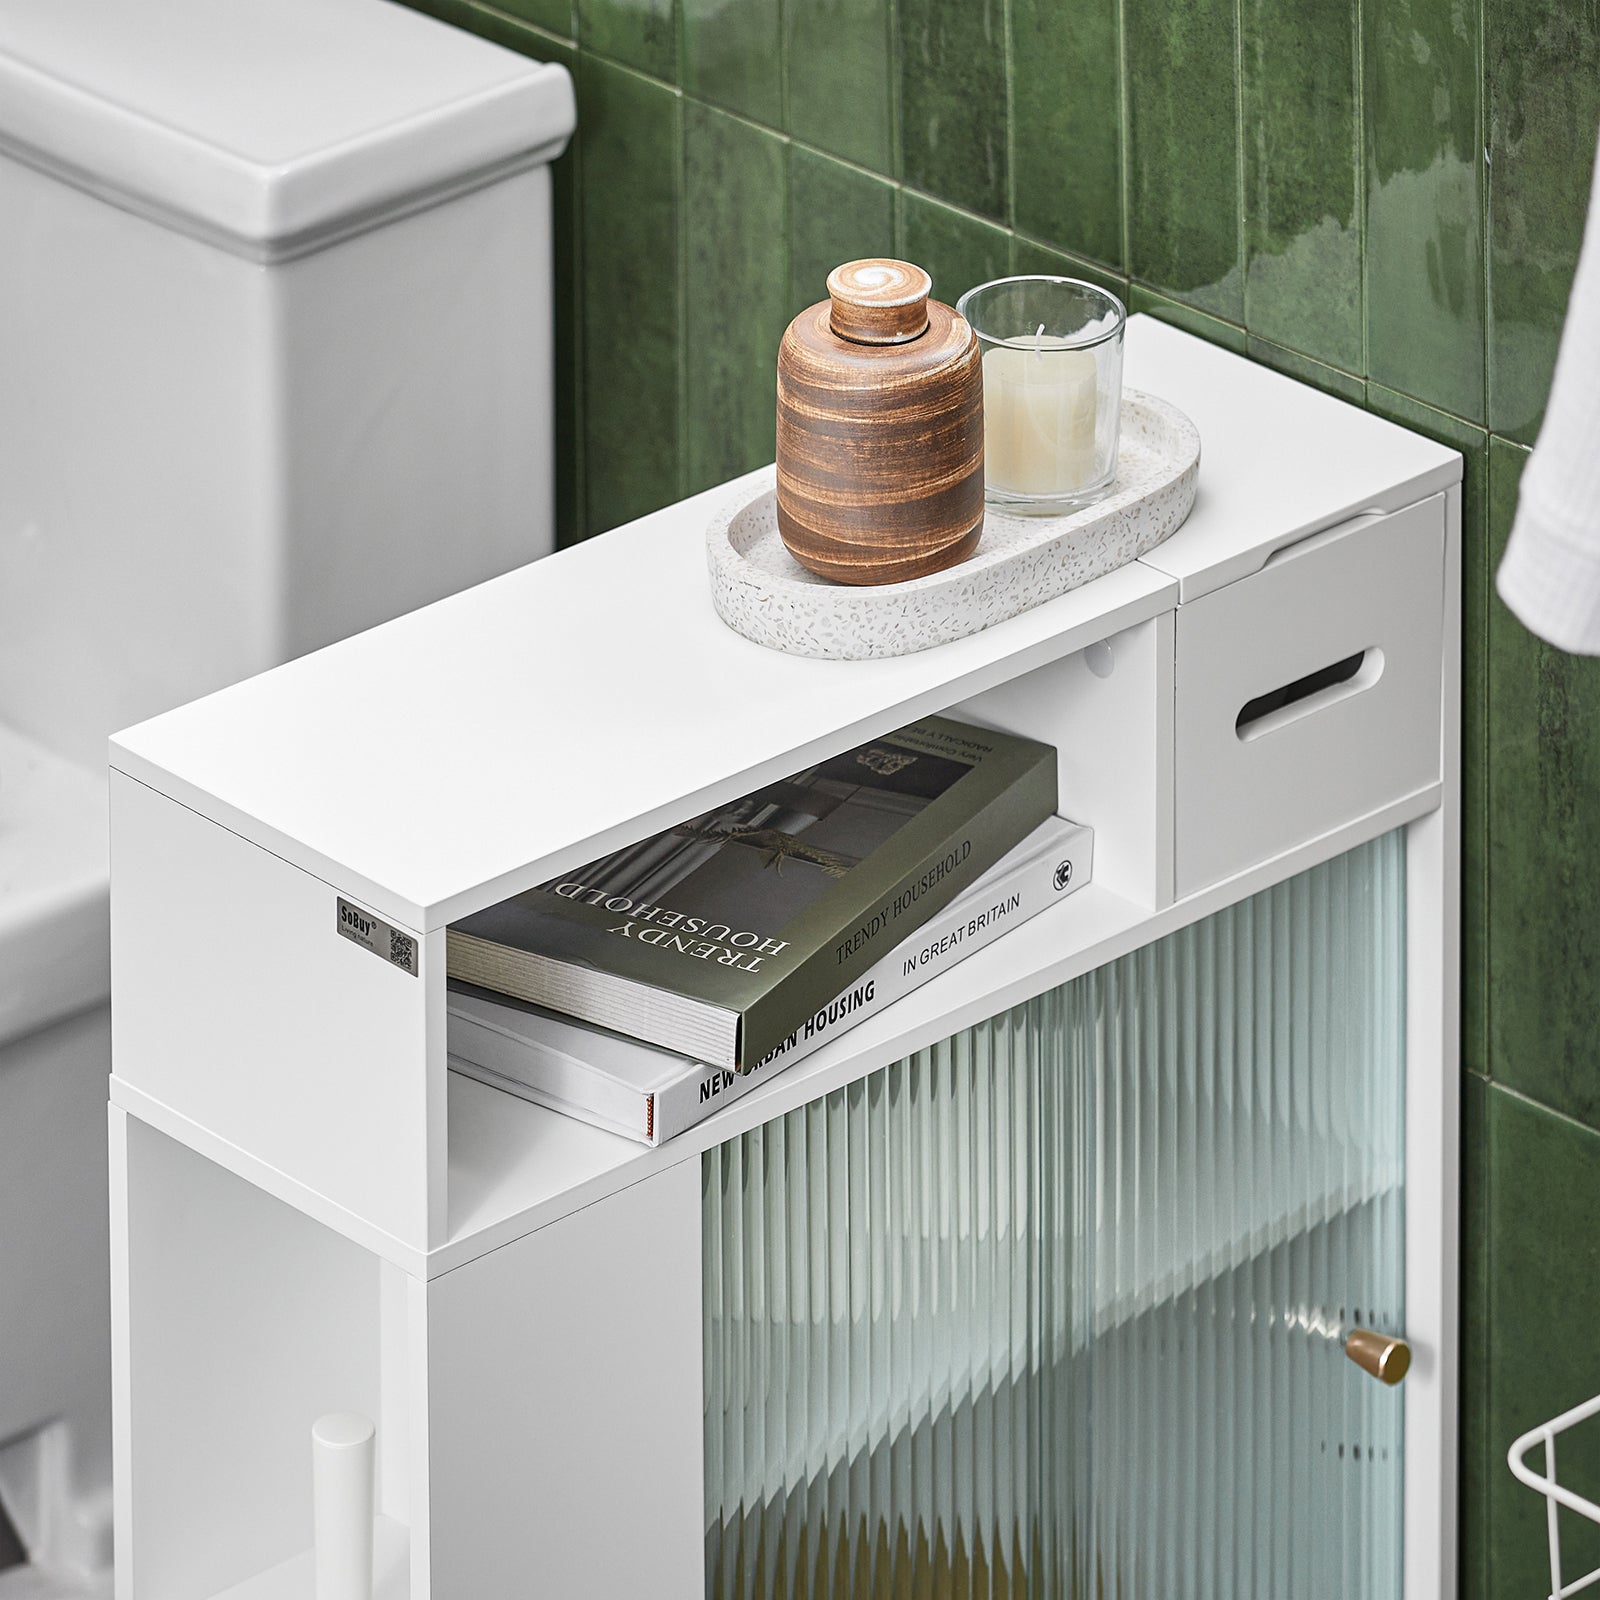 SoBuy BZR117-W, Bathroom Cabinet Storage Cabinet with 2 Sliding Glass Doors, Bathroom Toilet Paper Roll Holder On Wheels